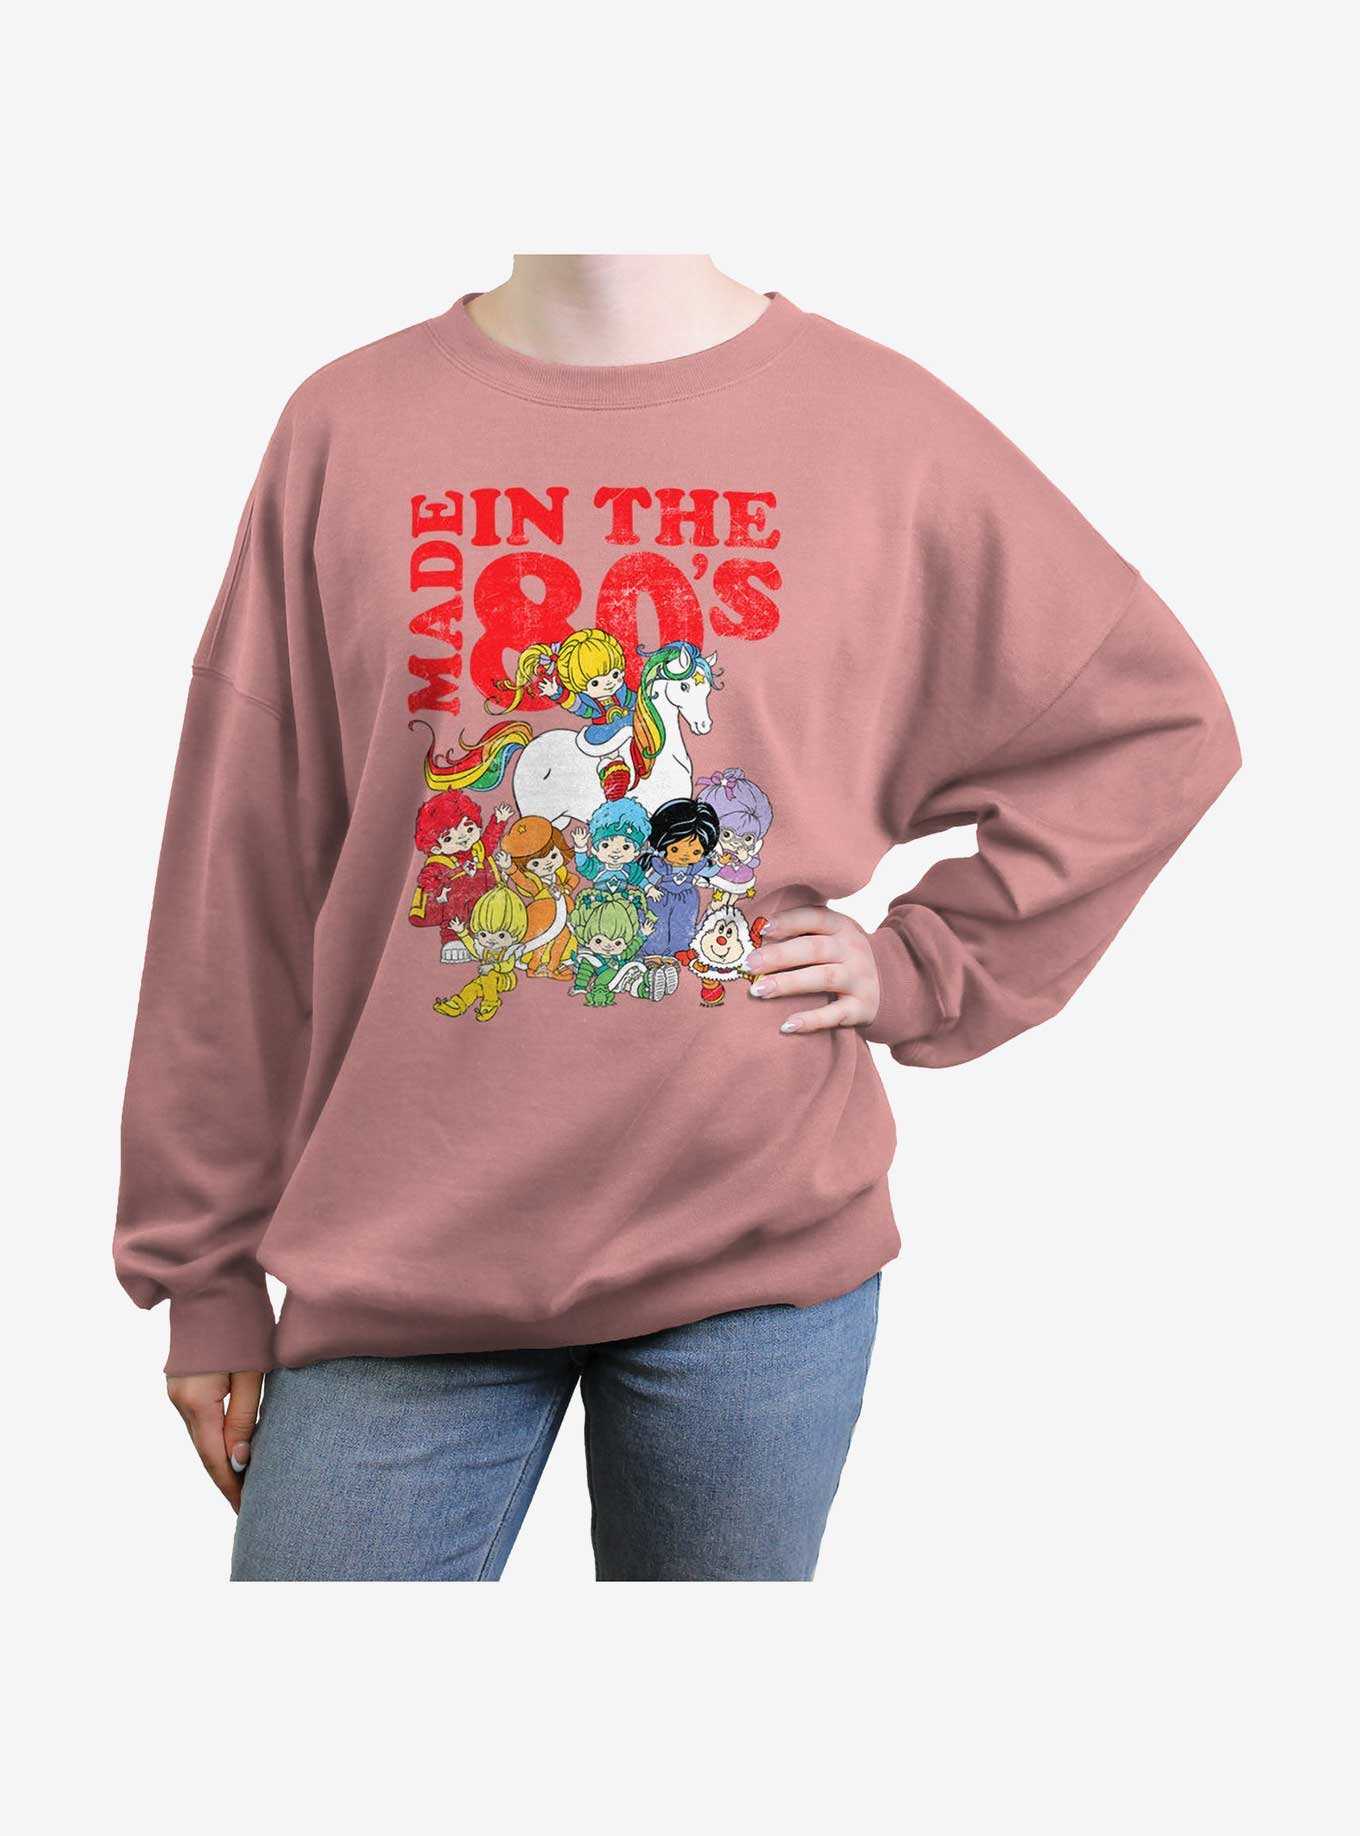 Rainbow Brite Made In The 80's Girls Oversized Sweatshirt, , hi-res